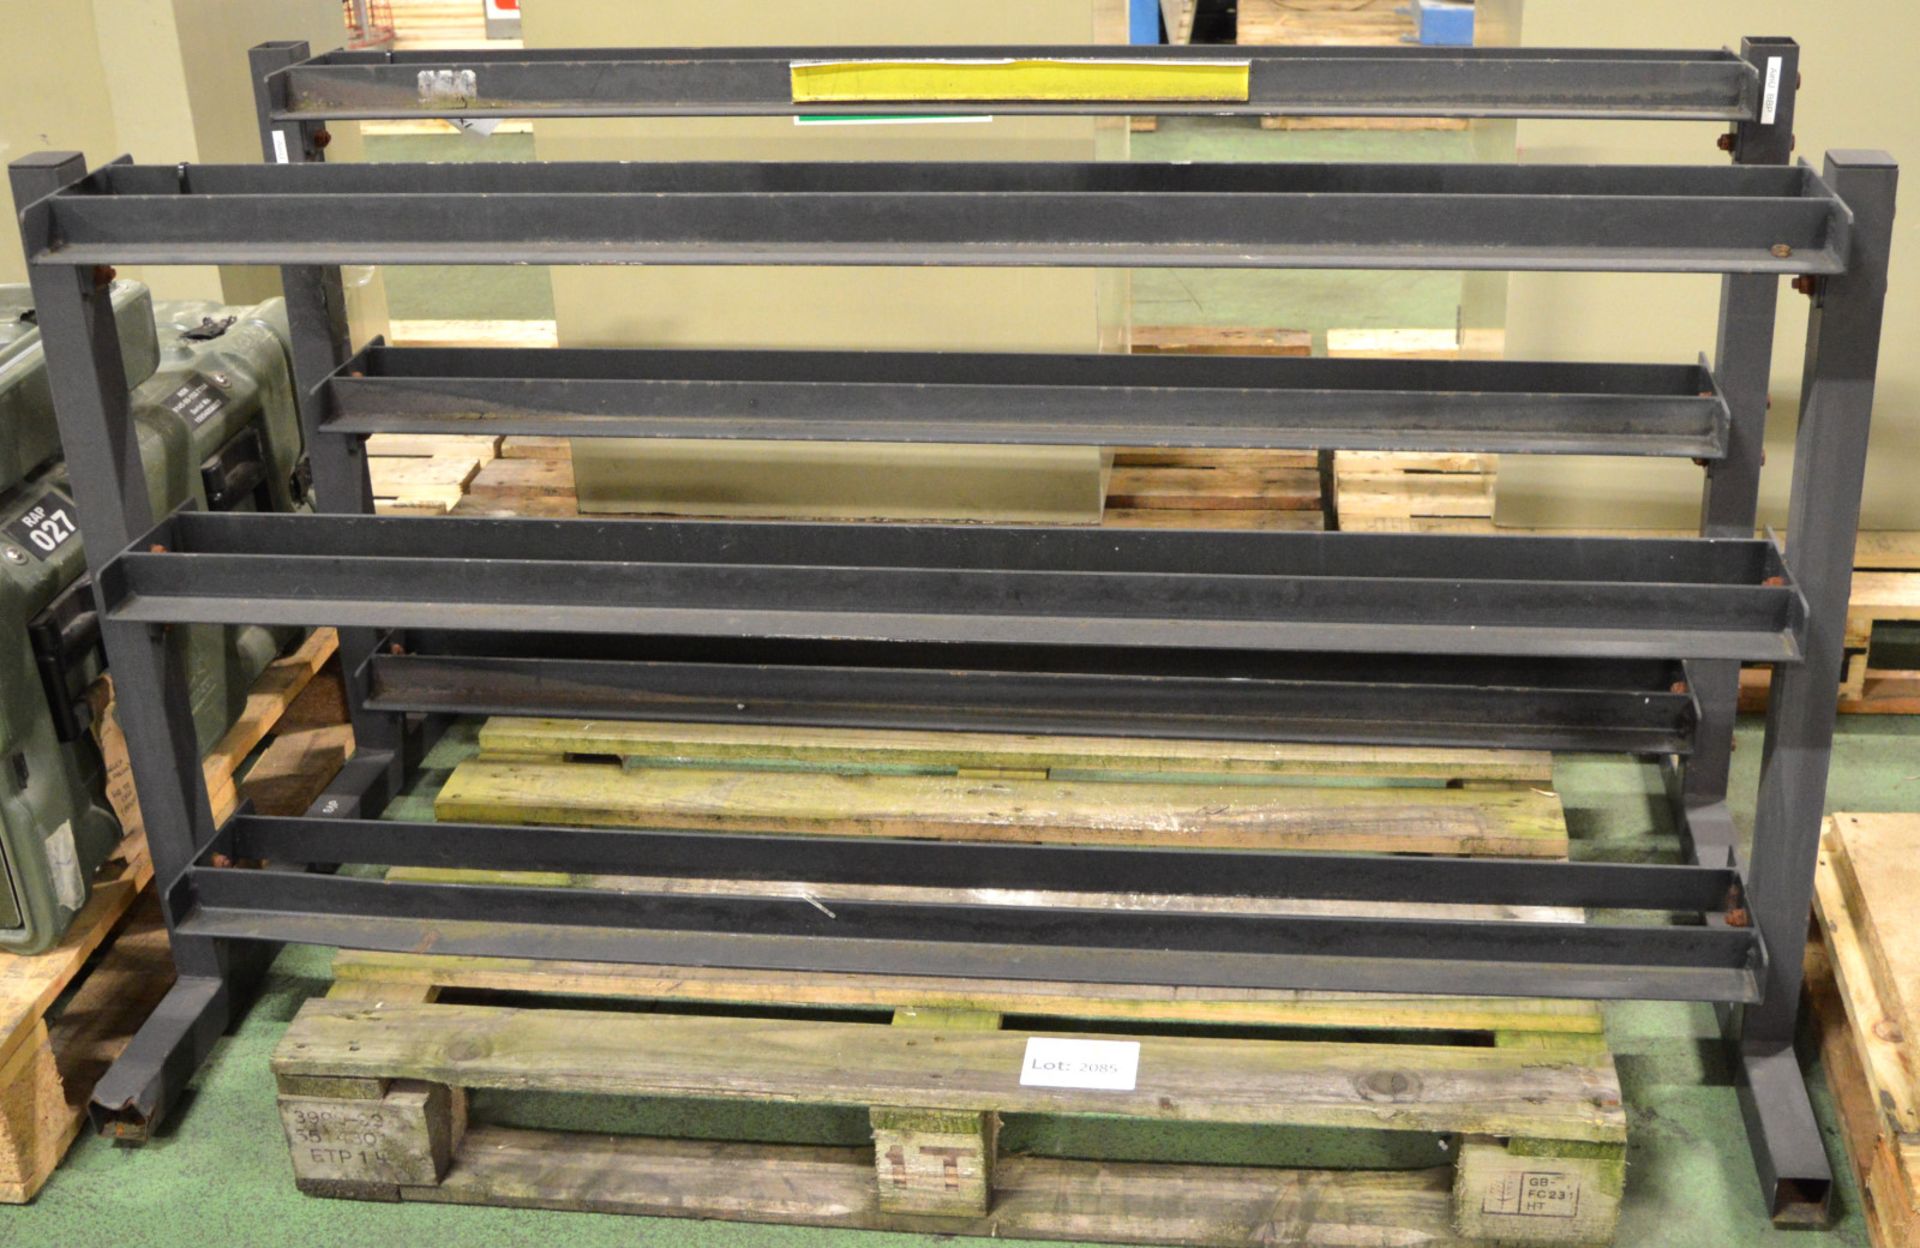 2x Steel Racks - Each 1600mm long x 450mm wide x 910mm high.